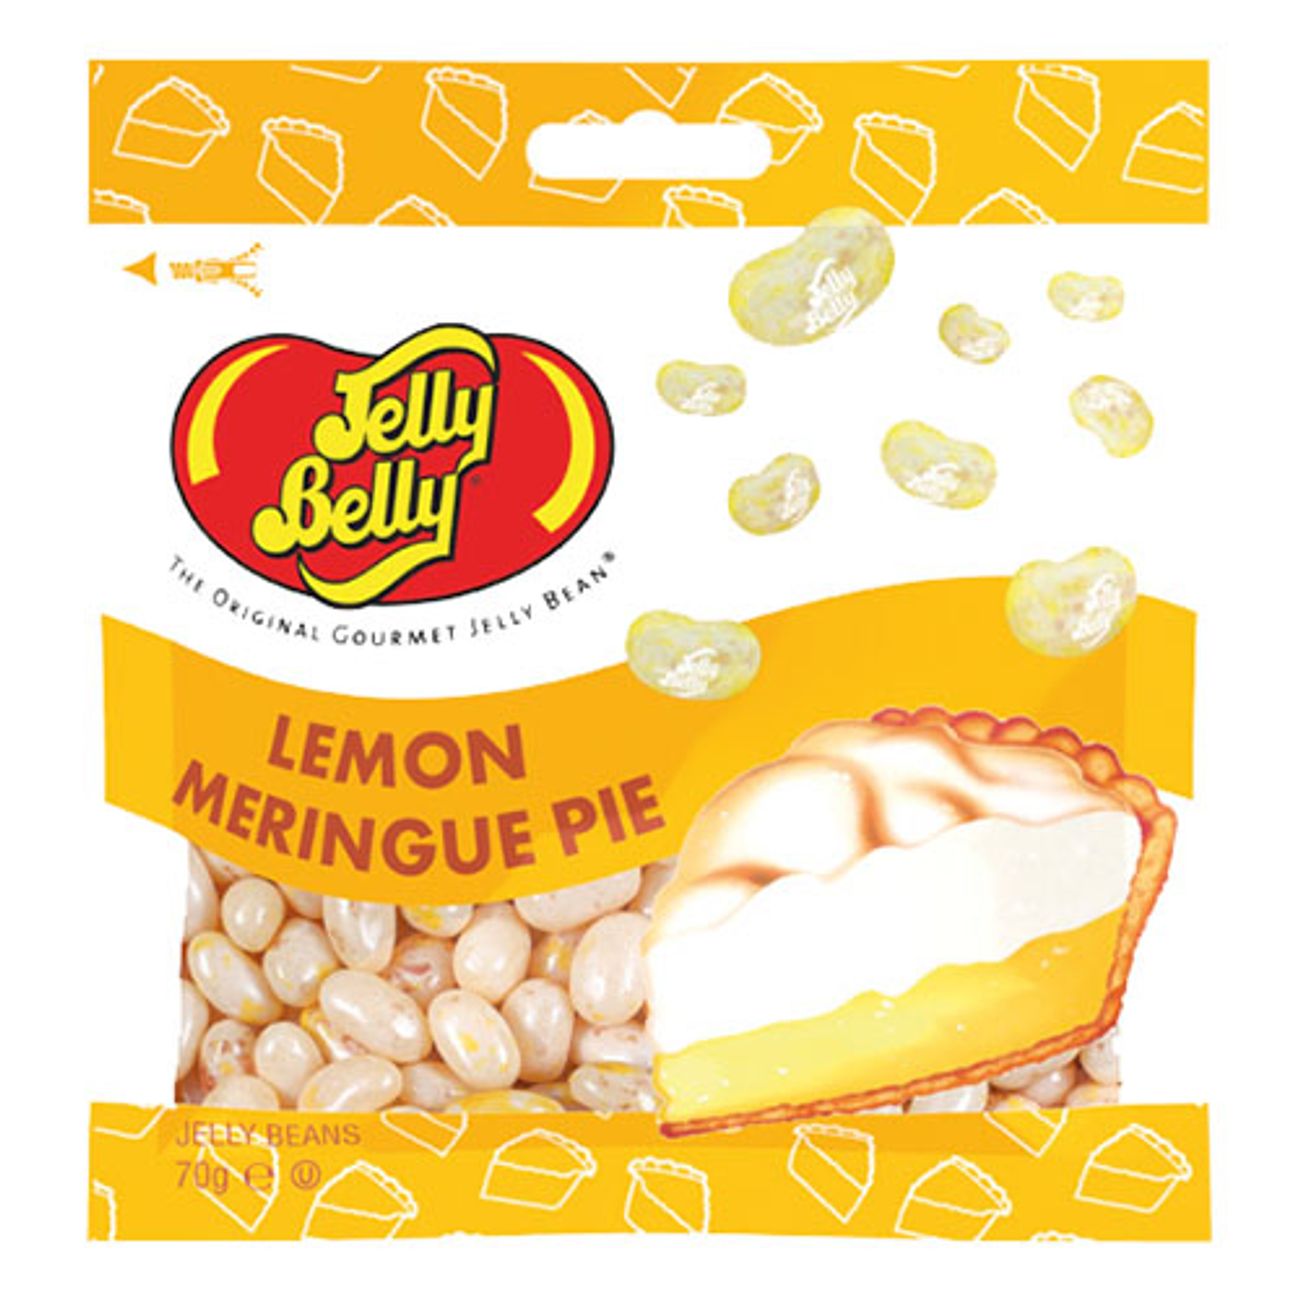 jellybelly-lemon-meringue-pie-1